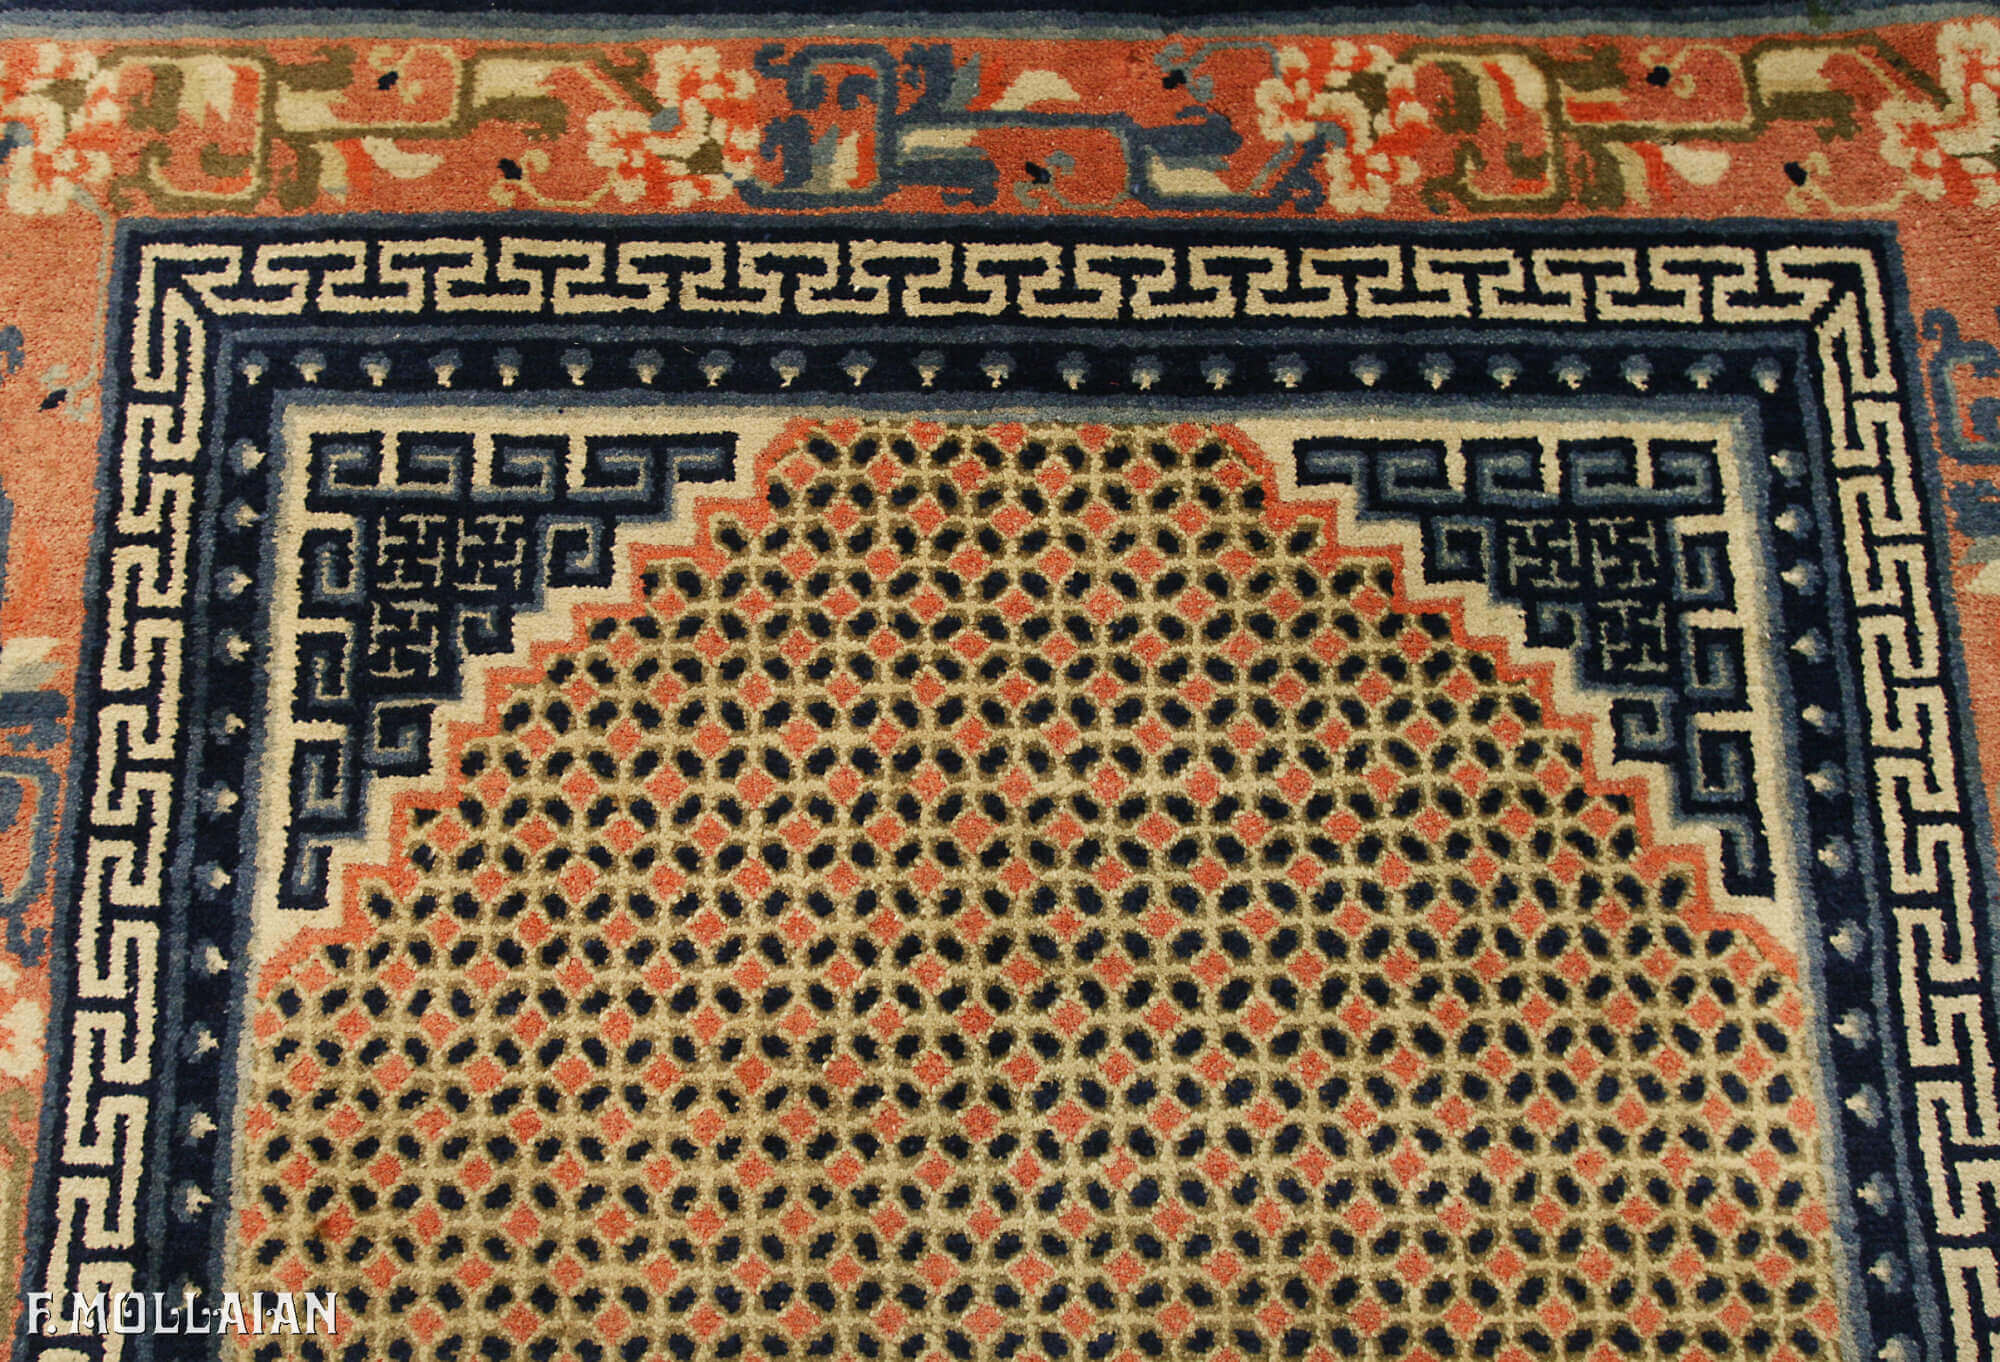 Ningxia Antique Chinese Rug n°:12353086